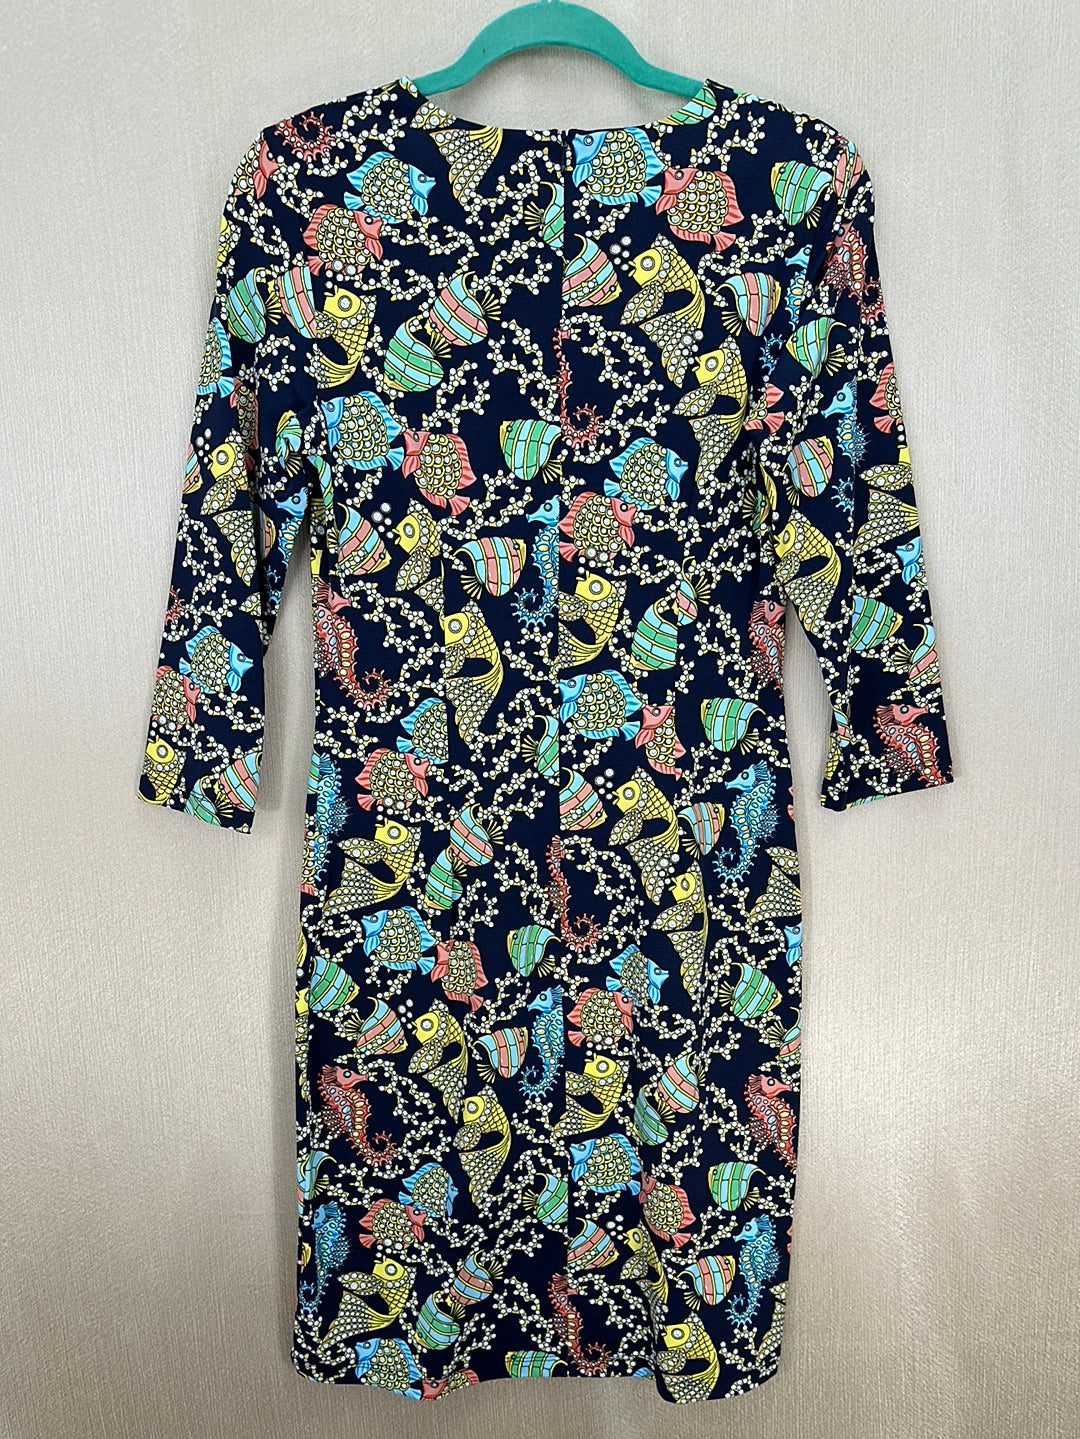 J. MCLAUGHLIN navy Fish Print Catalina Cloth 3/4 Sleeve Sophia Dress - S